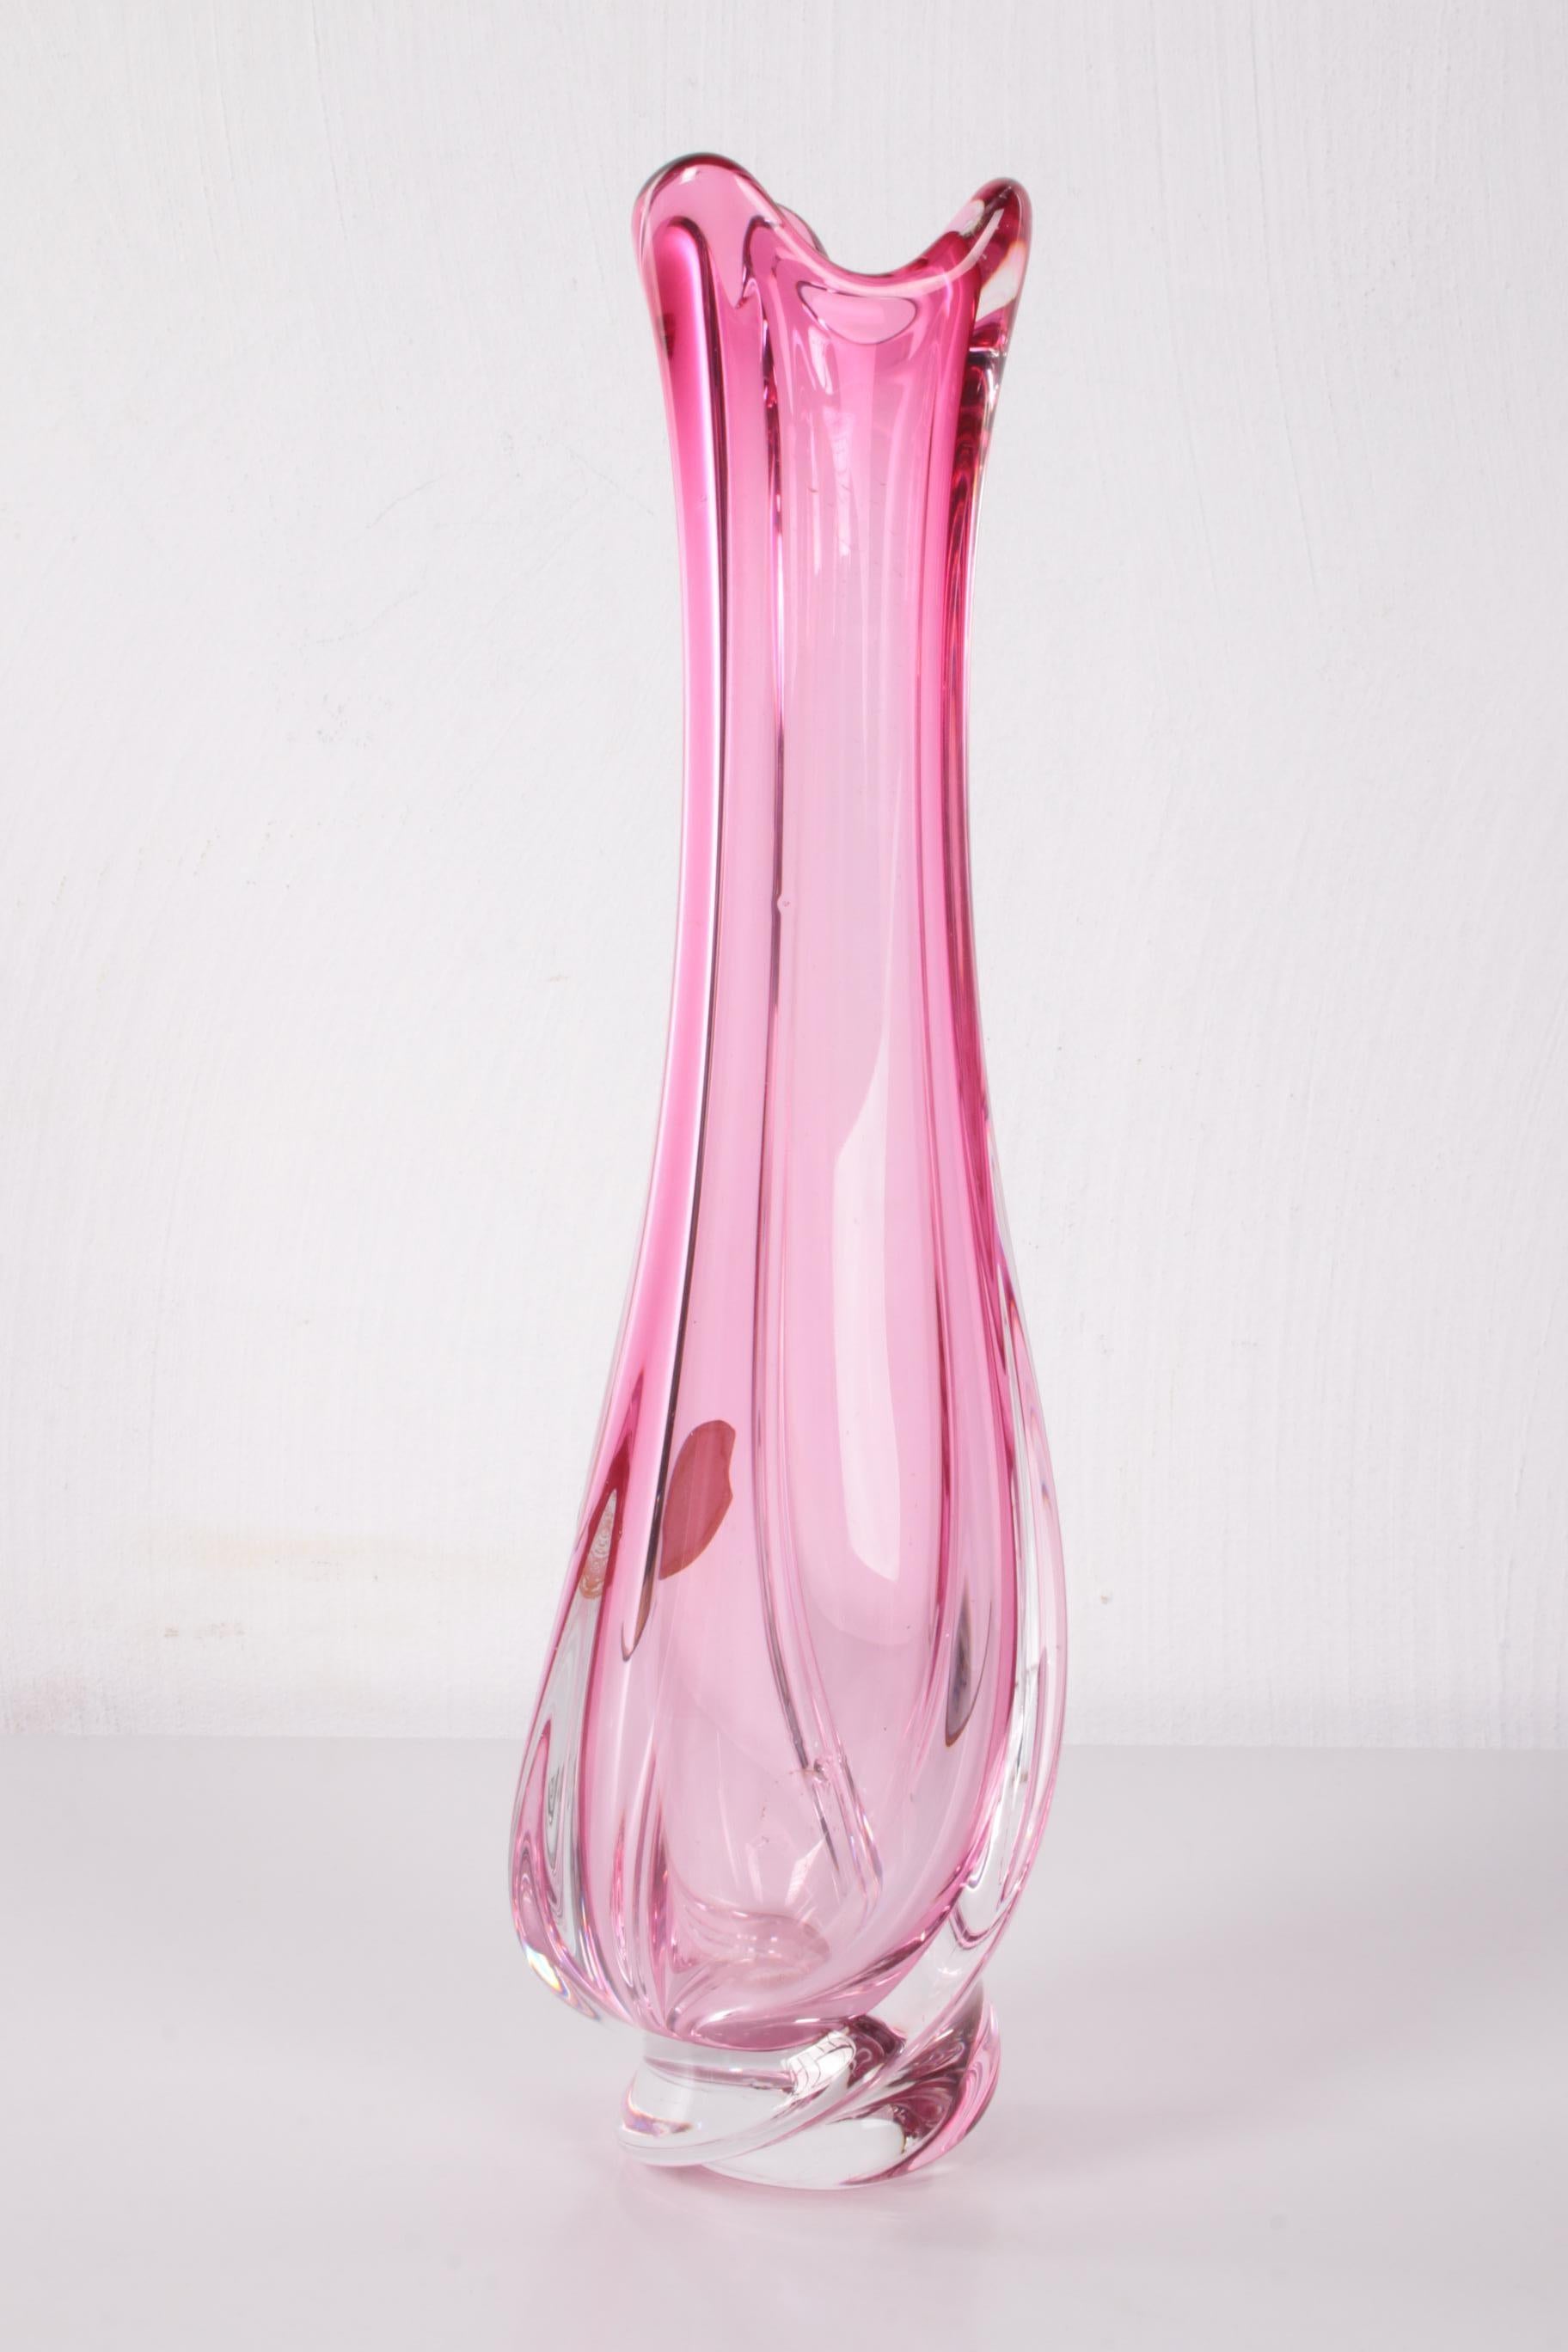 Mid-Century Modern Vintage Crystal Vase from Val St-Lambert Belgium, 1960